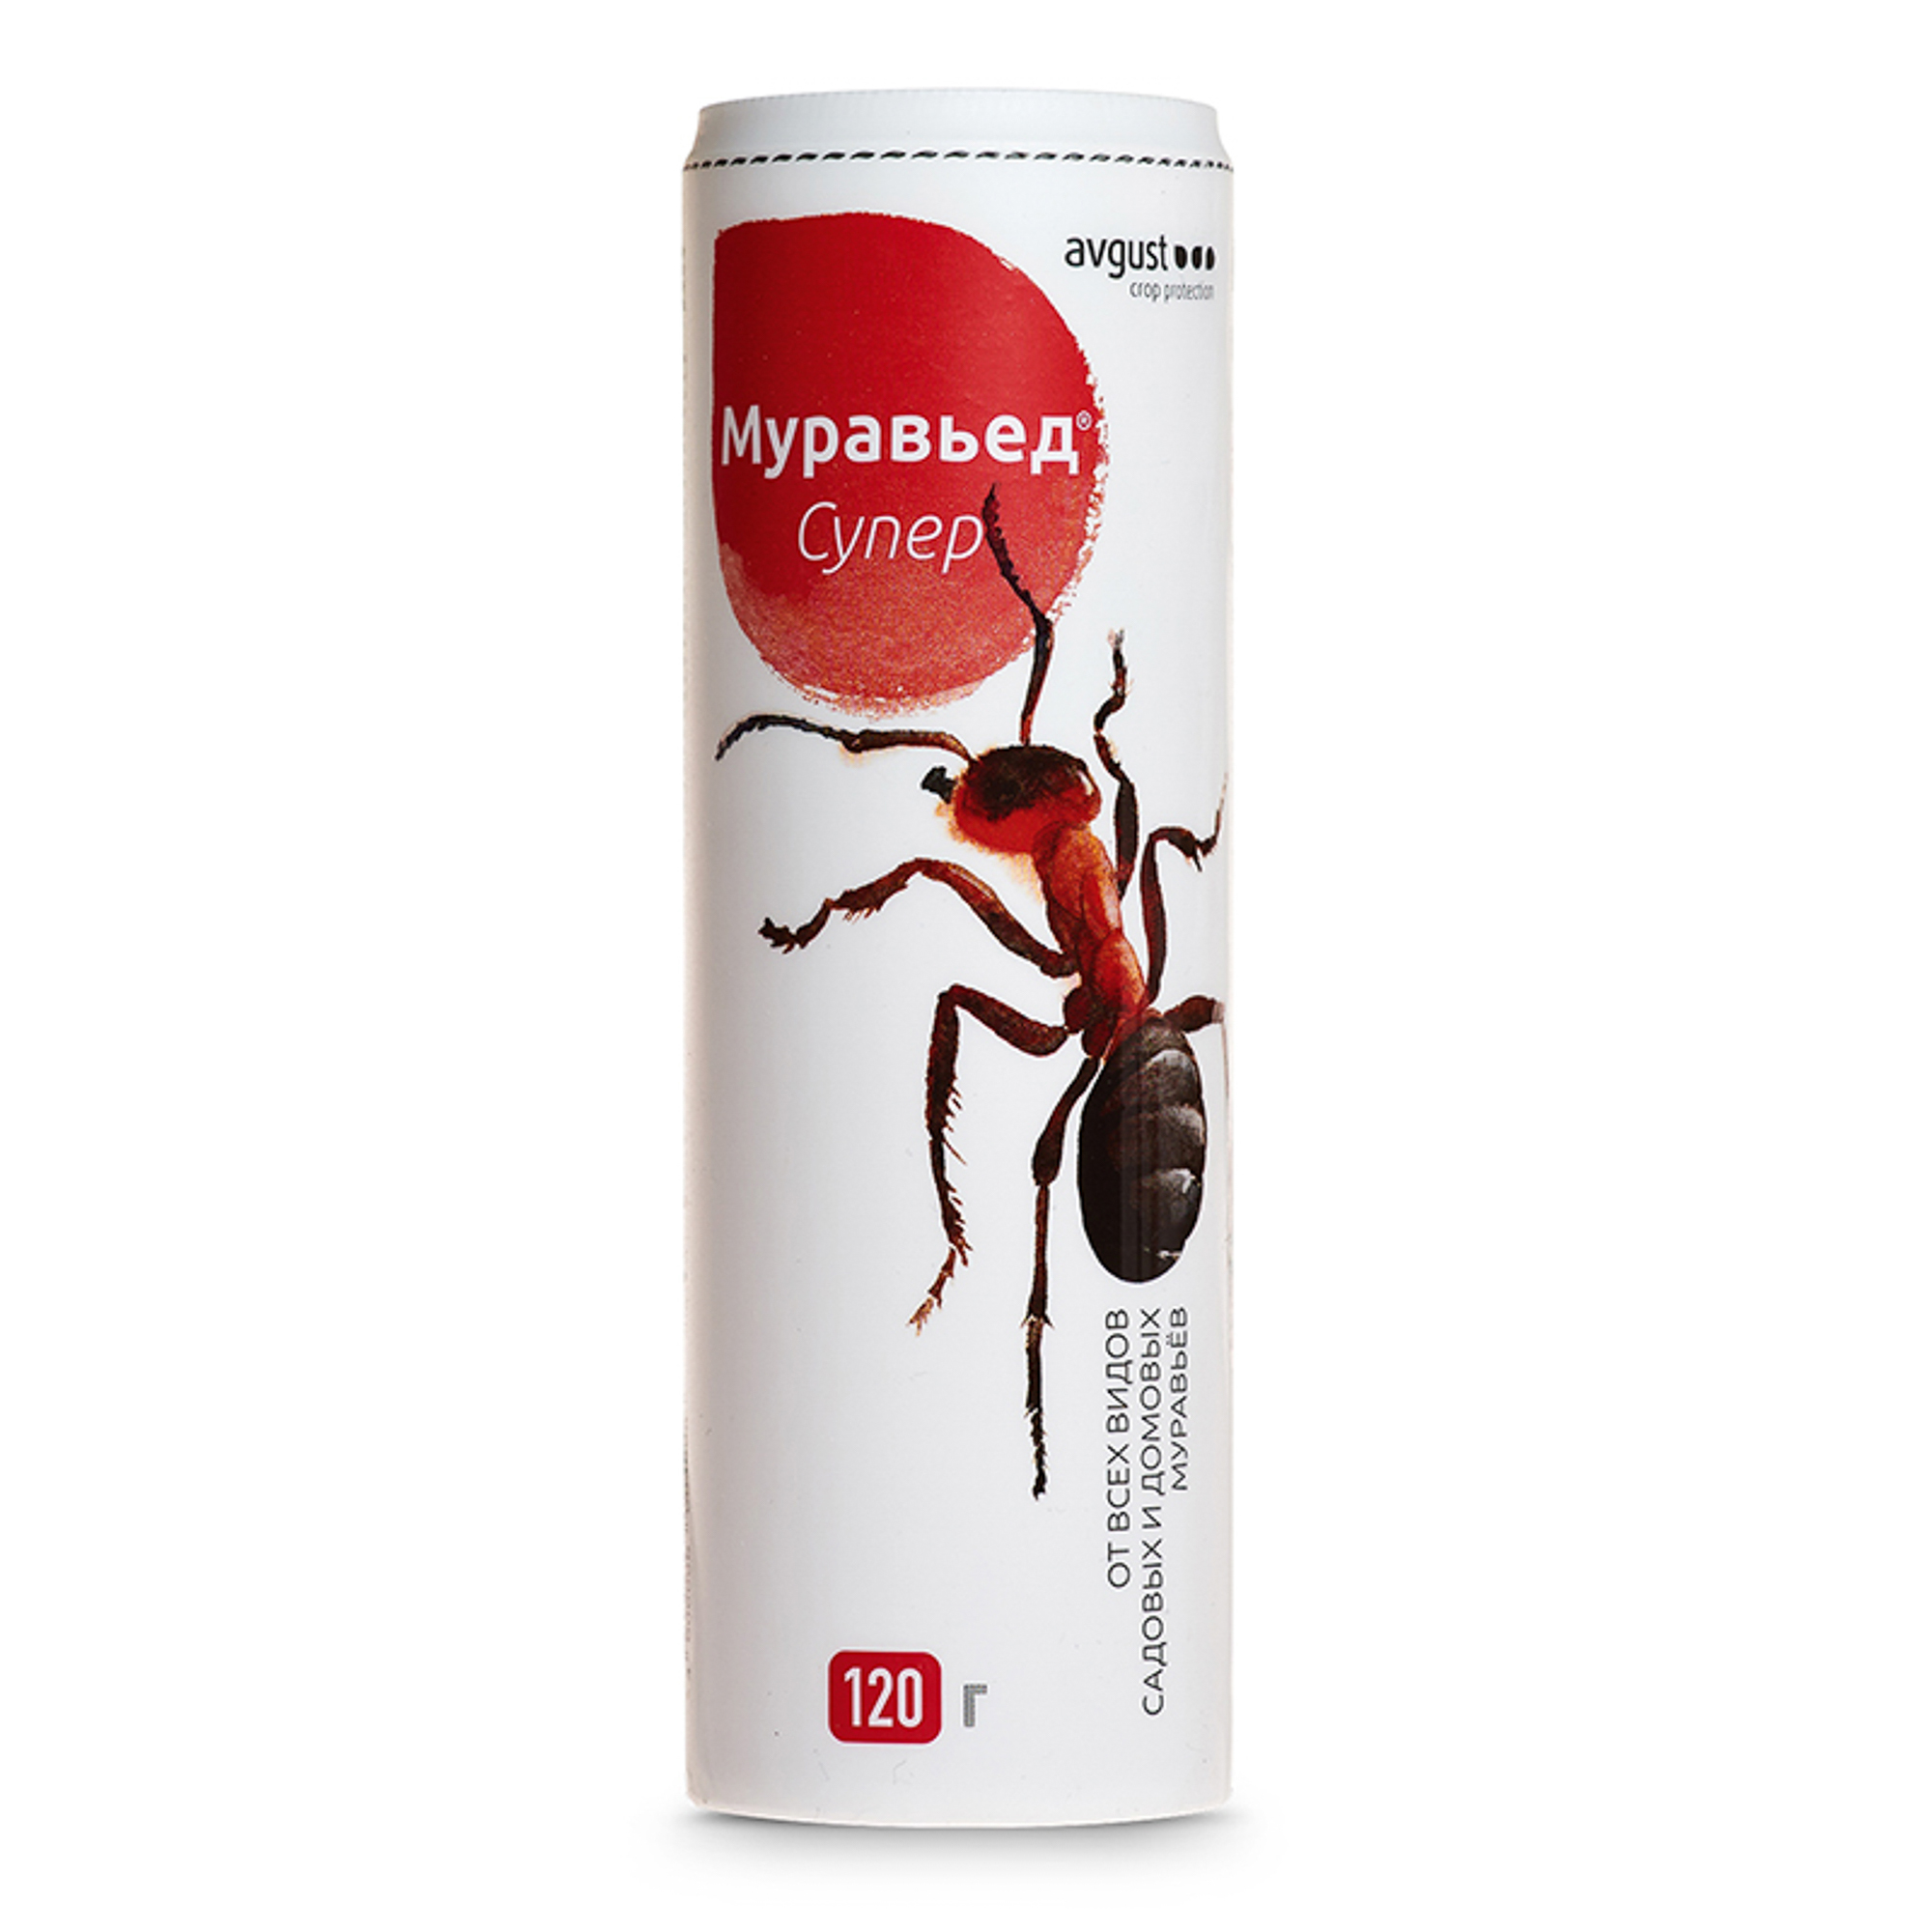 средство защиты от всех видов мураьев муравьед супер avgust 120 г Муравьед супер туба Avgust 120 г